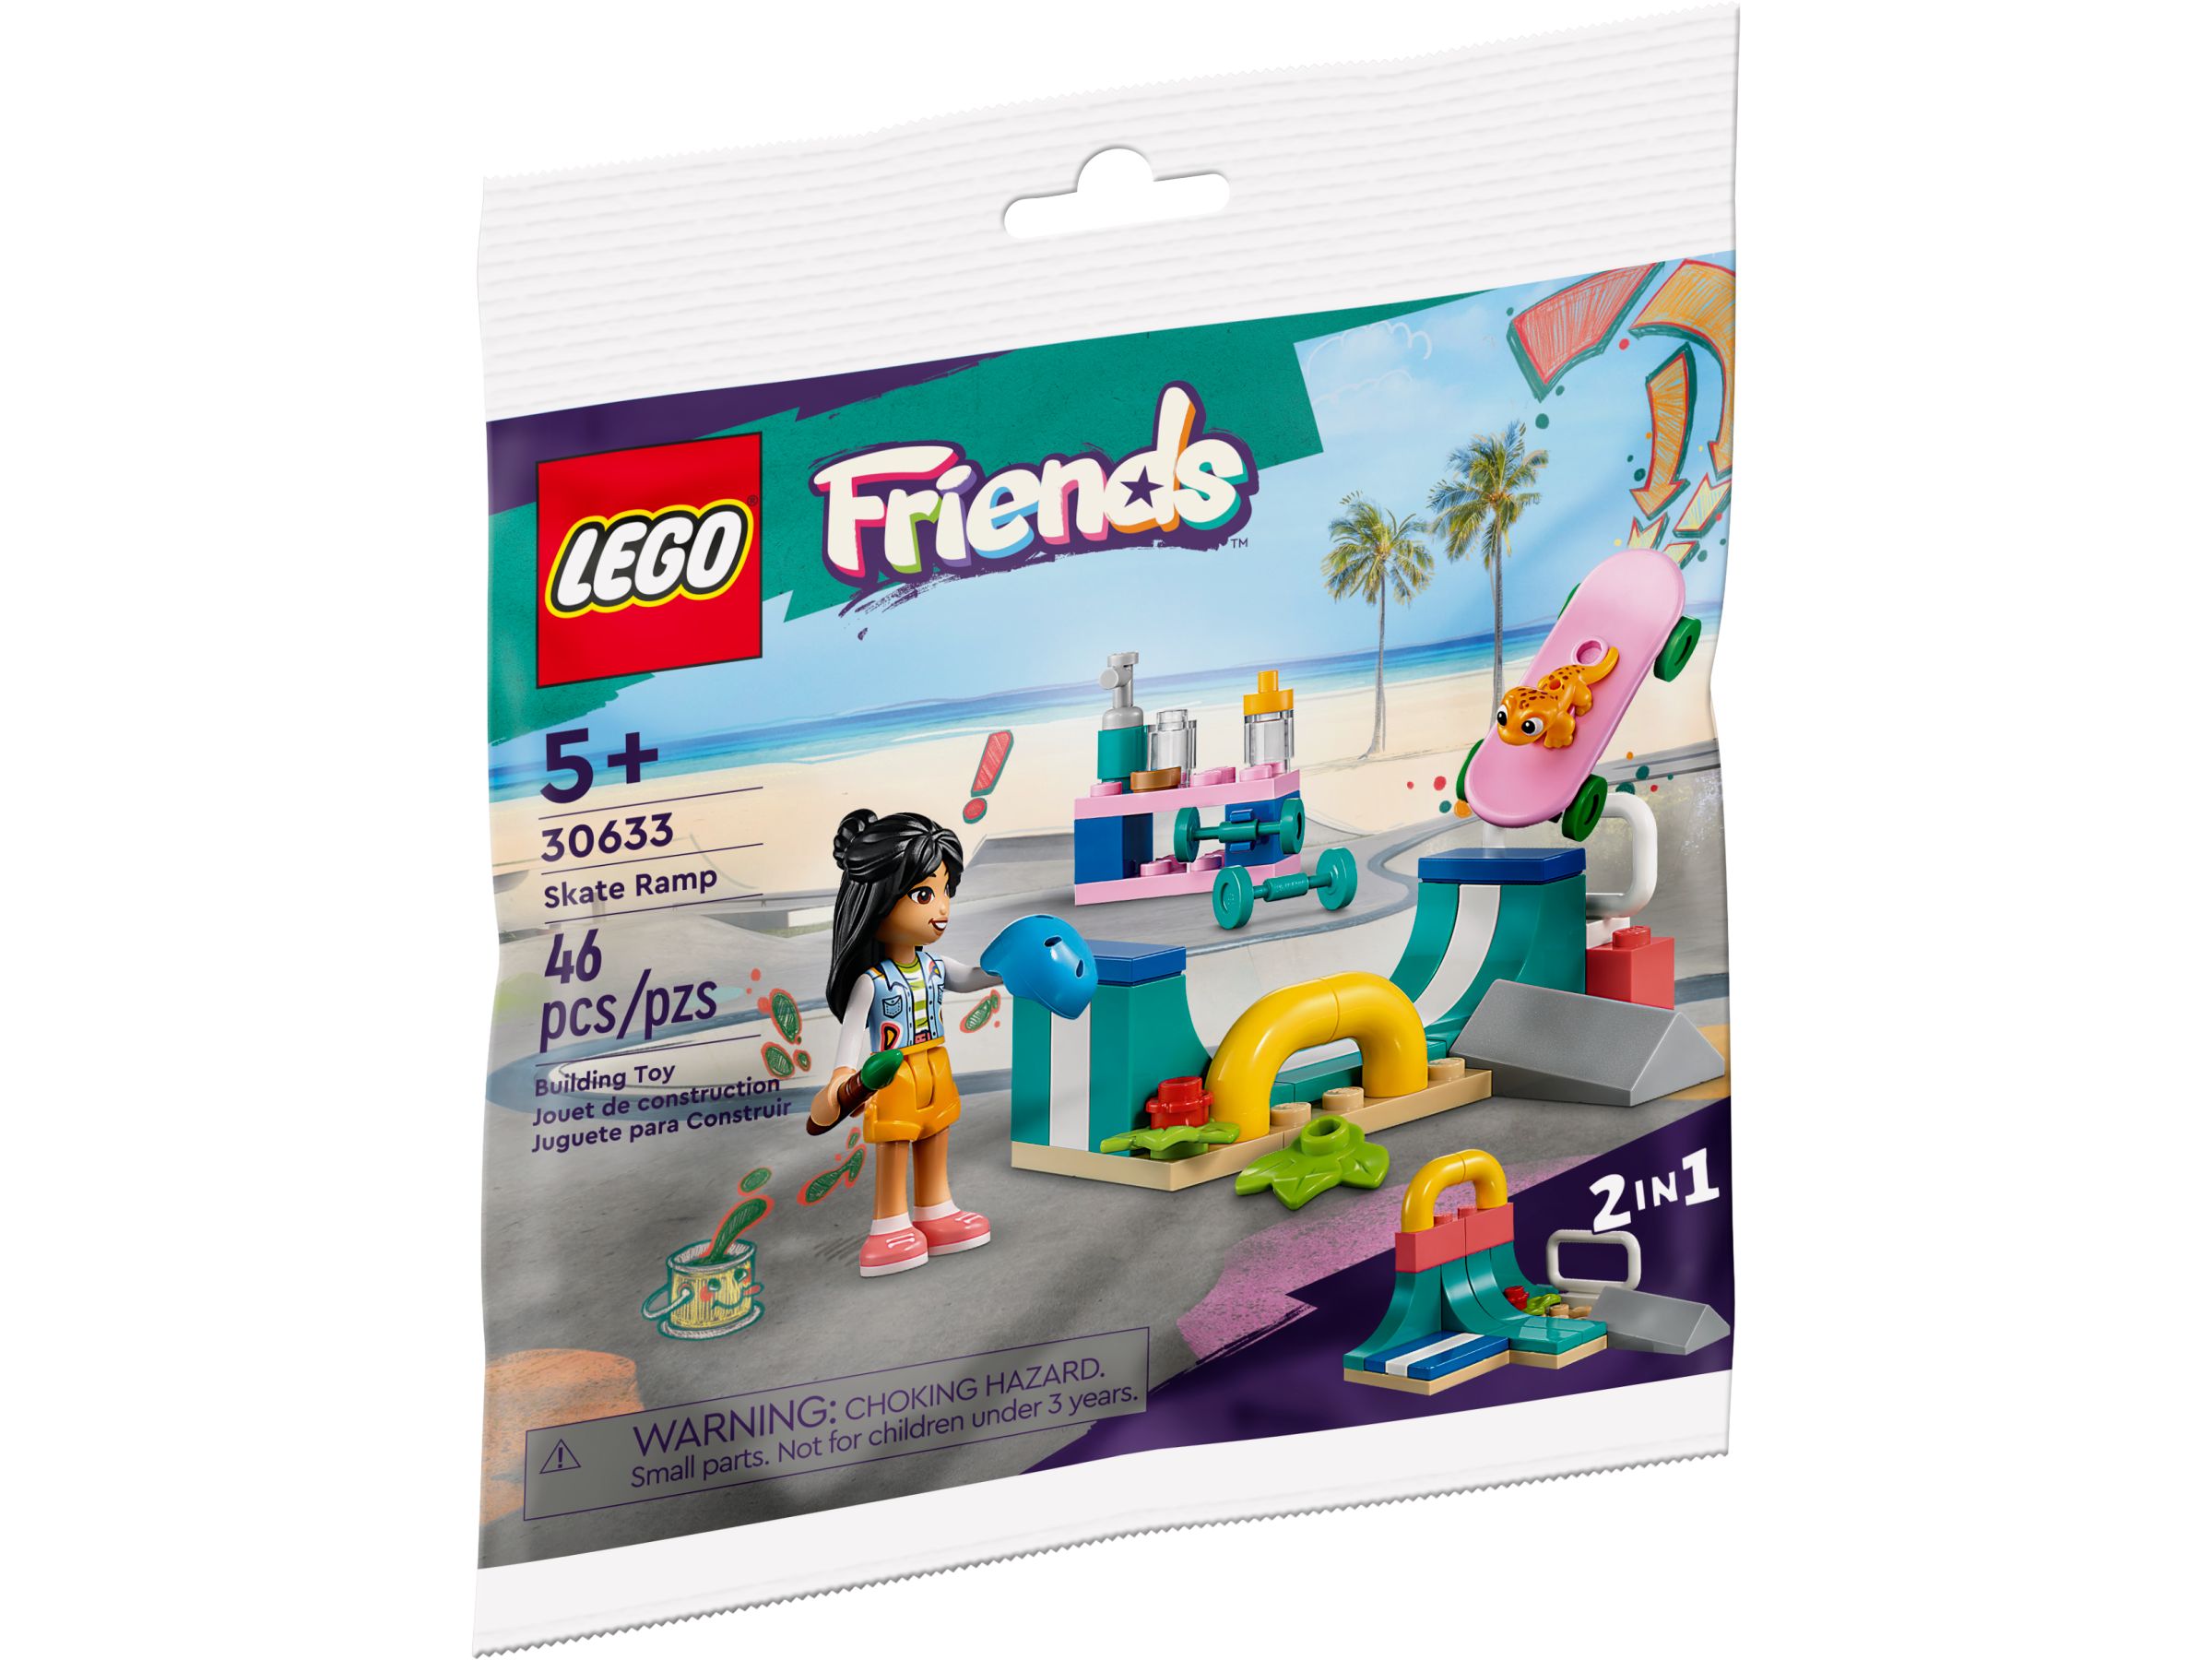 LEGO Friends 30633 Skateboardrampe LEGO_30633_alt1.jpg